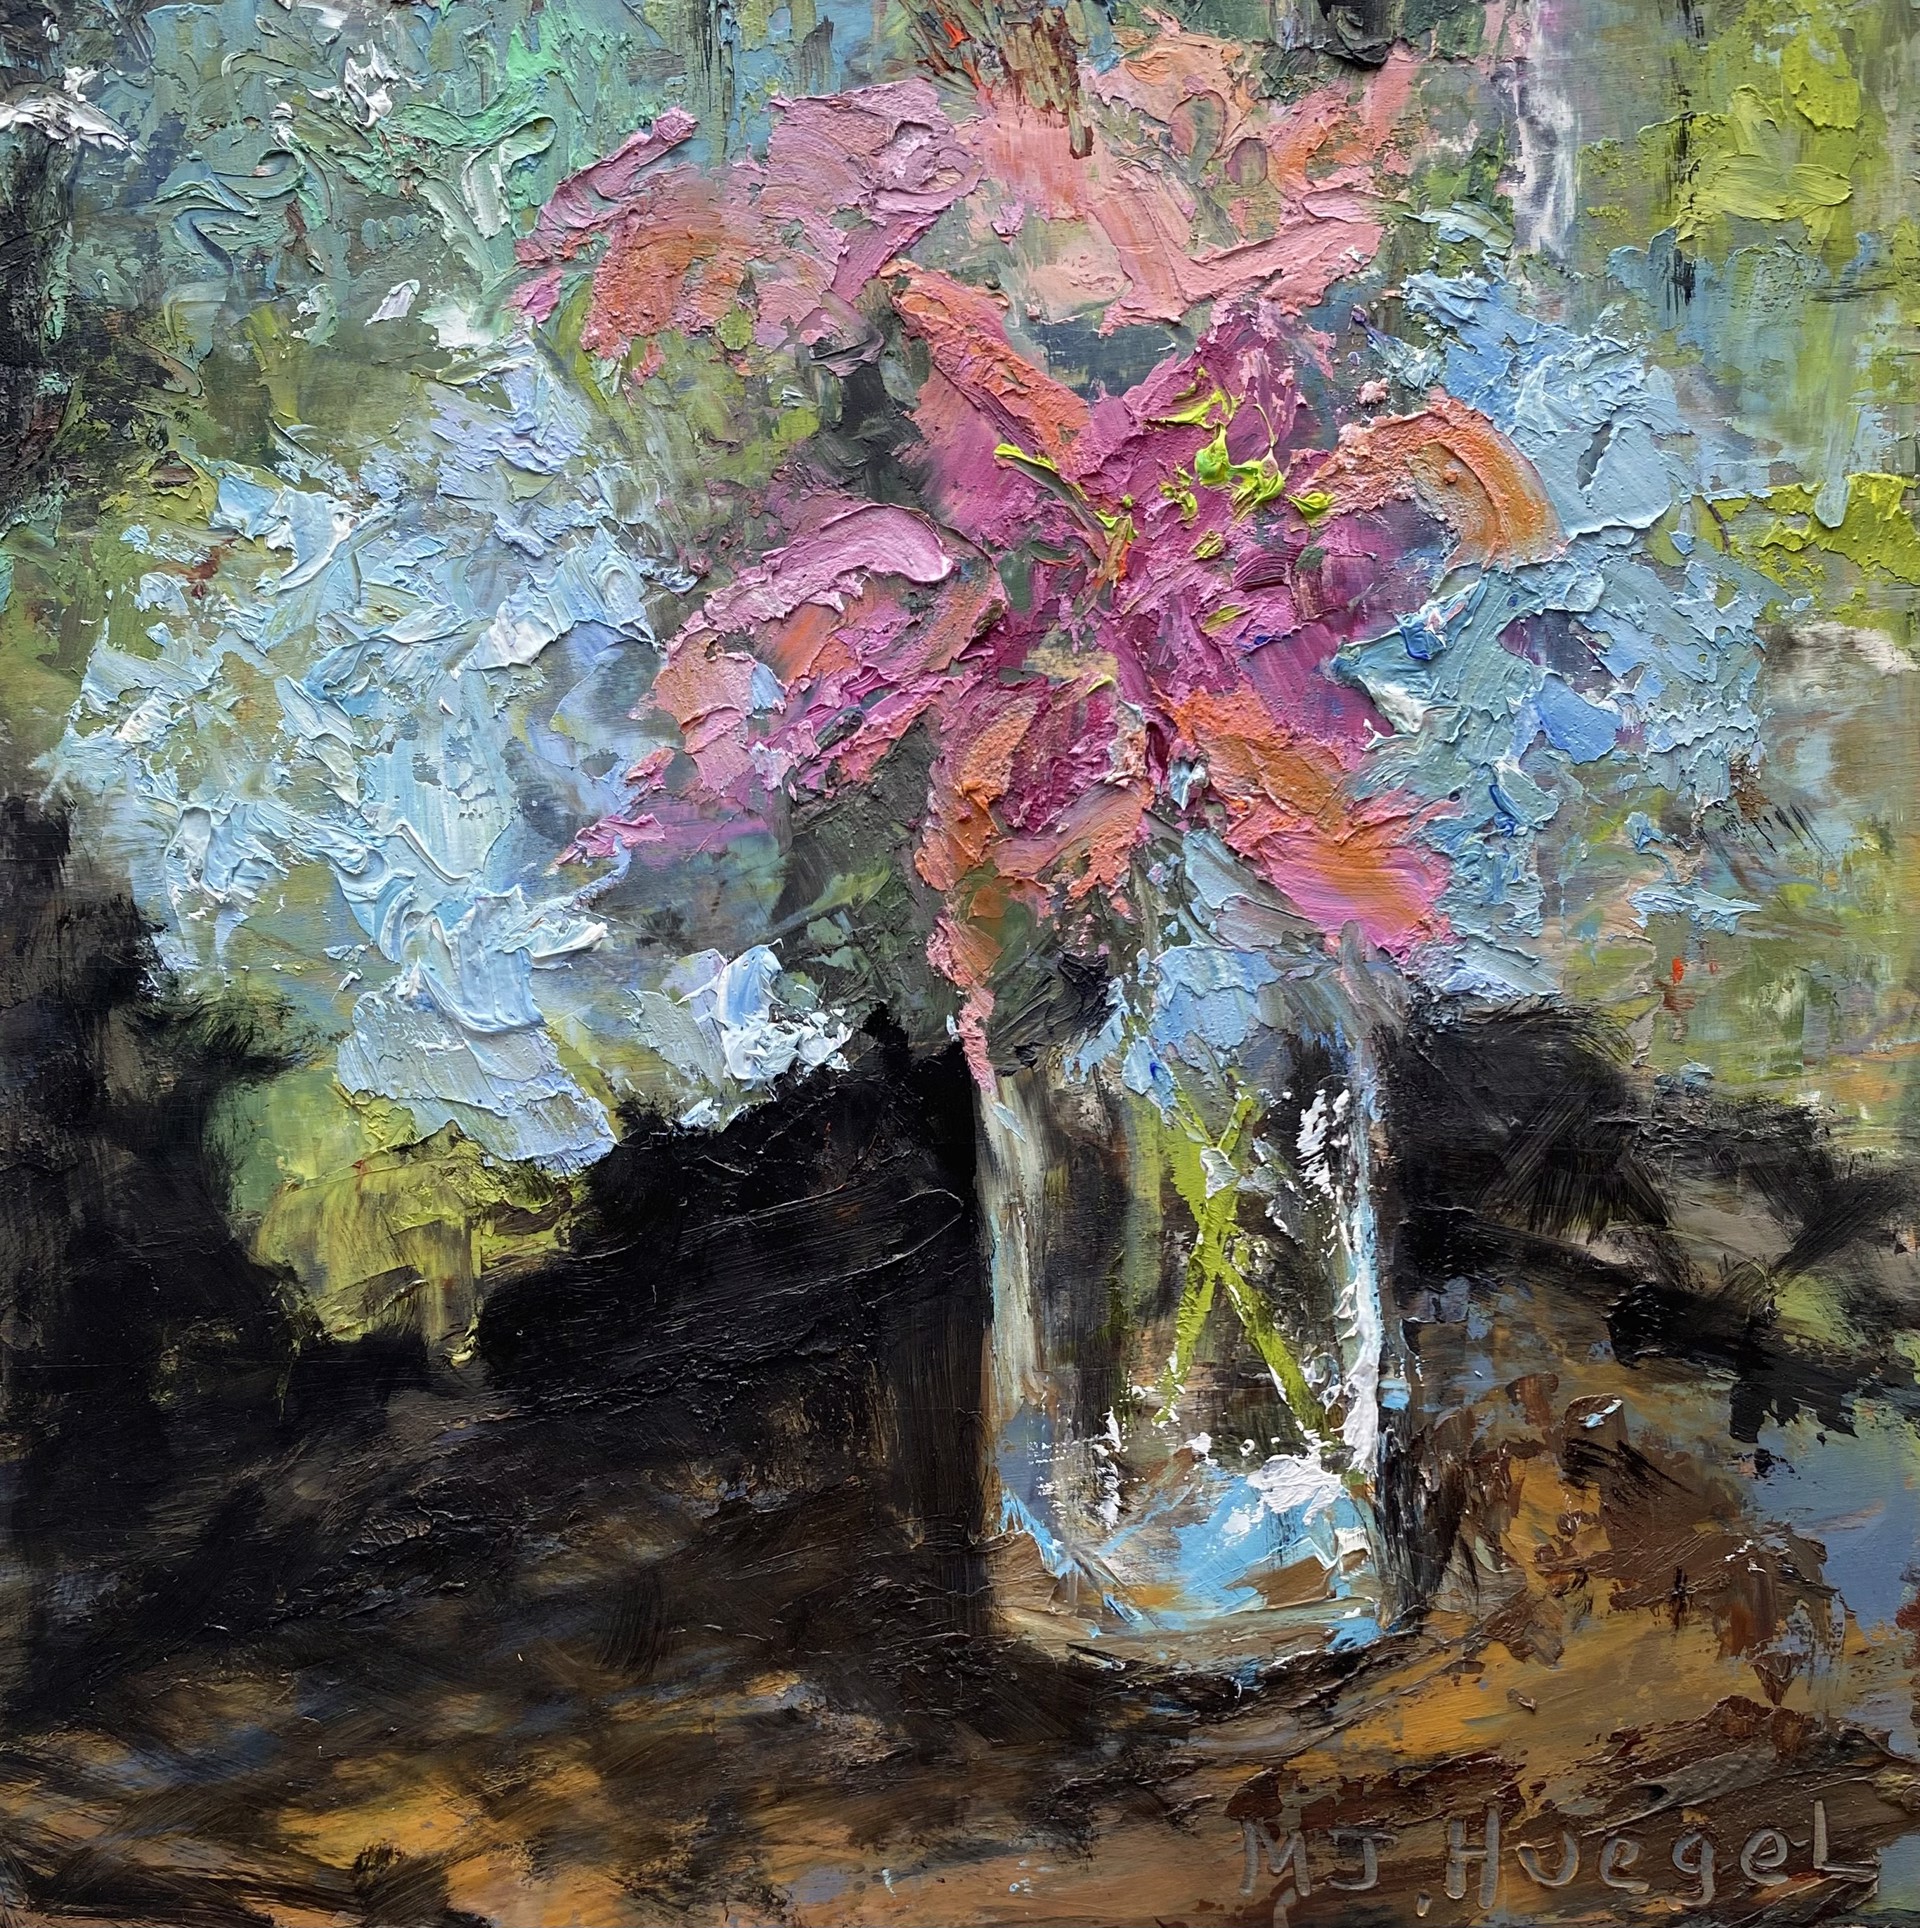 Big Blossoms by Mary Jane Huegel